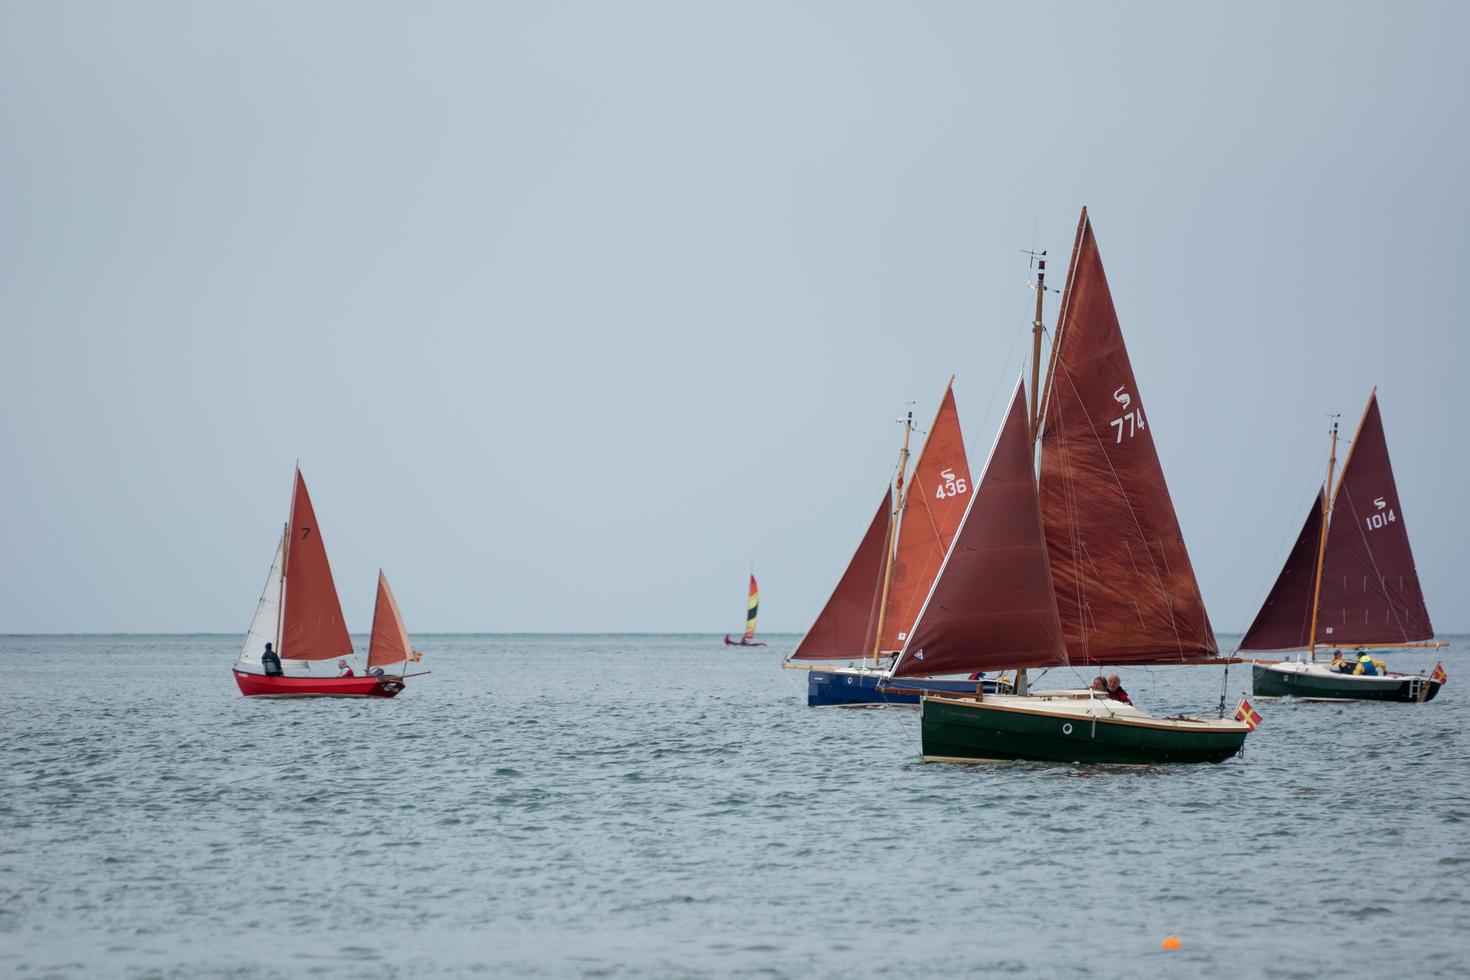 appledore, devon, uk, 2013. navigando nell'estuario torridge e taw foto